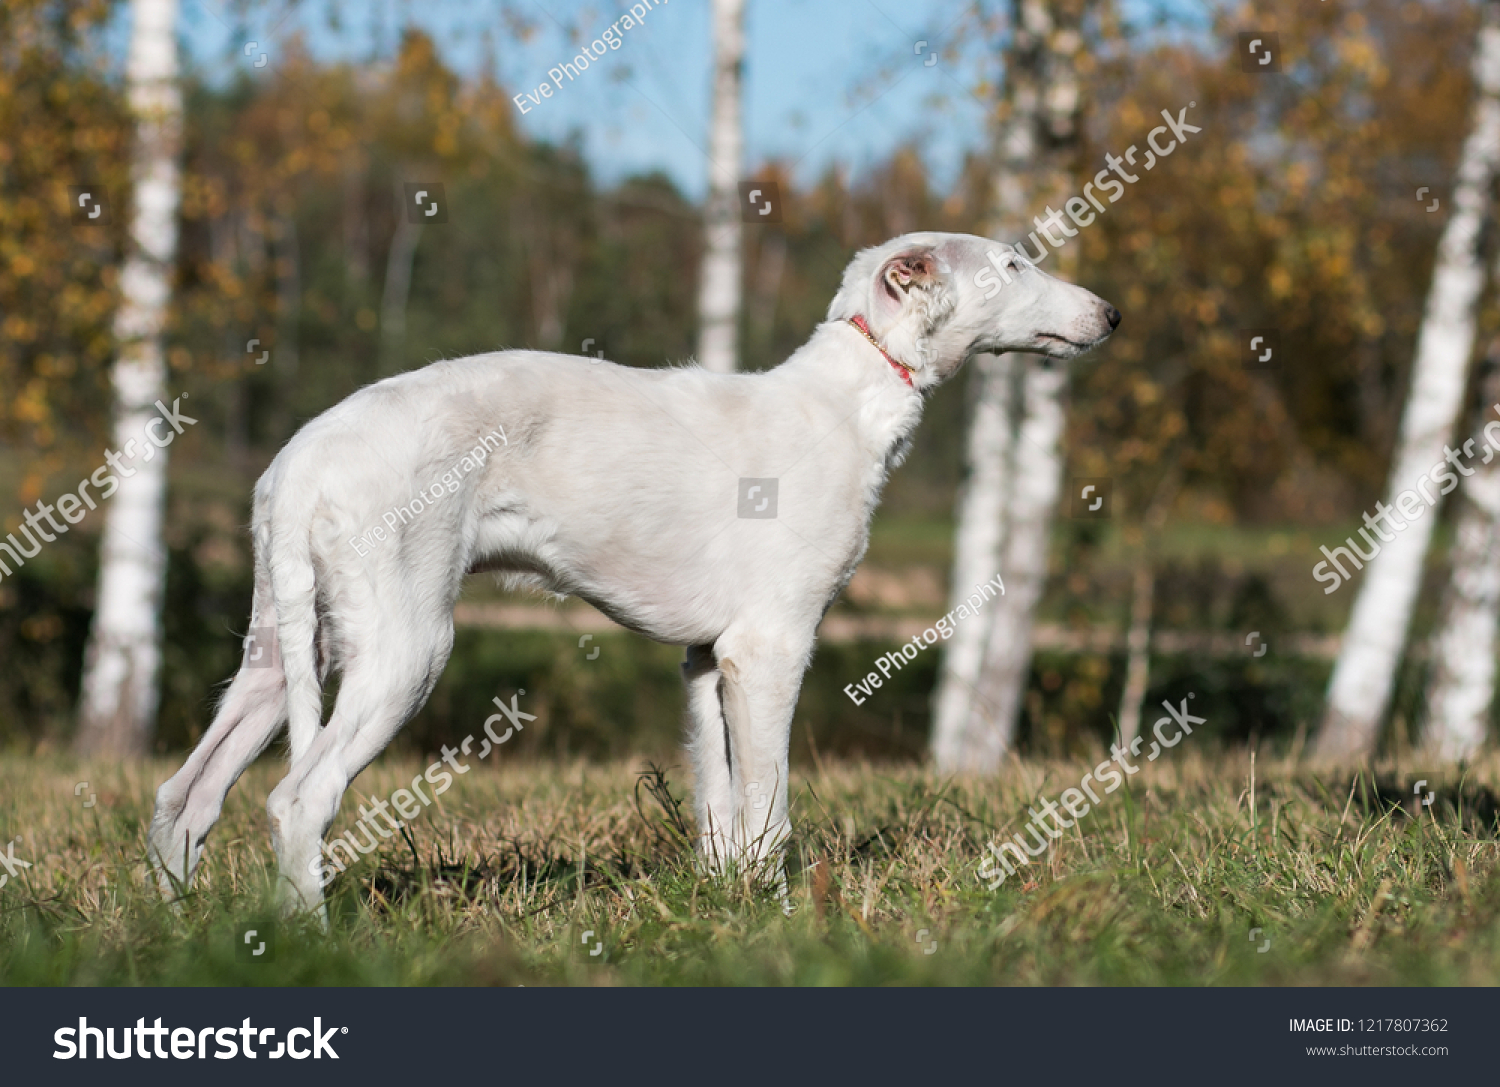 Borzoi Dog Puppy Posing Outside Beautiful Stock Photo Edit Now 1217807362